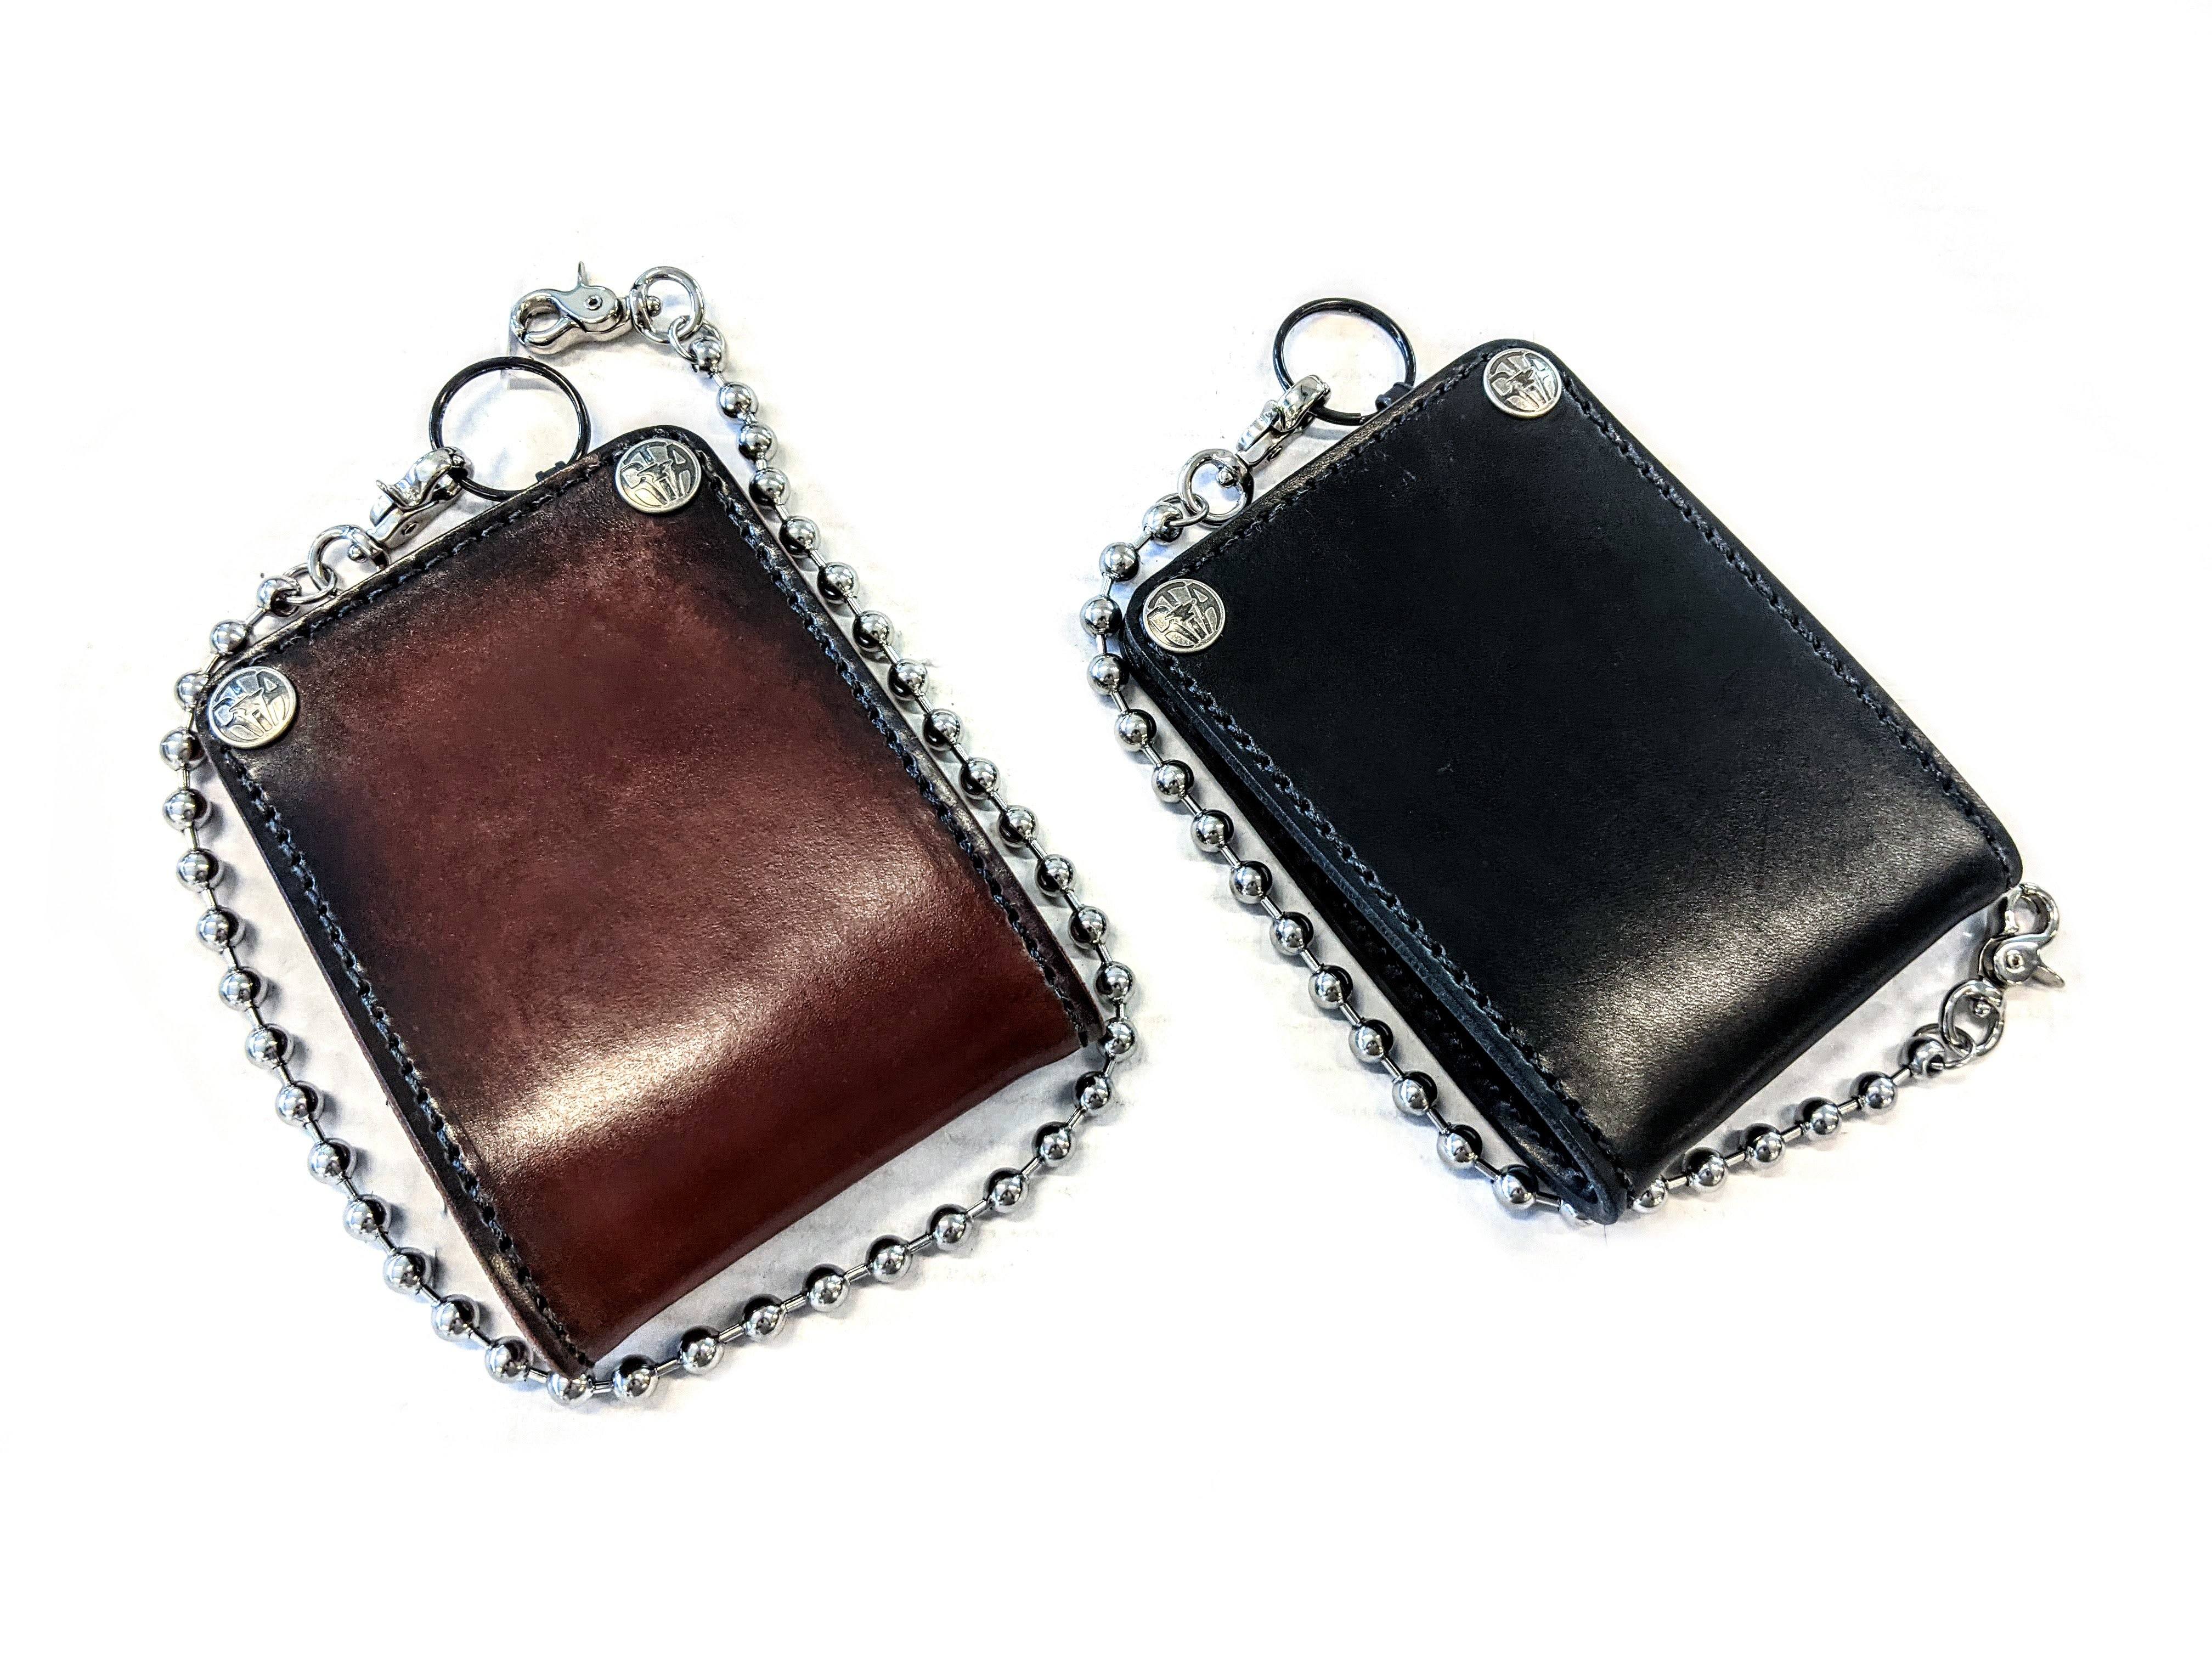 22” Coated Titanium Wallet Chain - RTANVIL Original - Anvil Customs